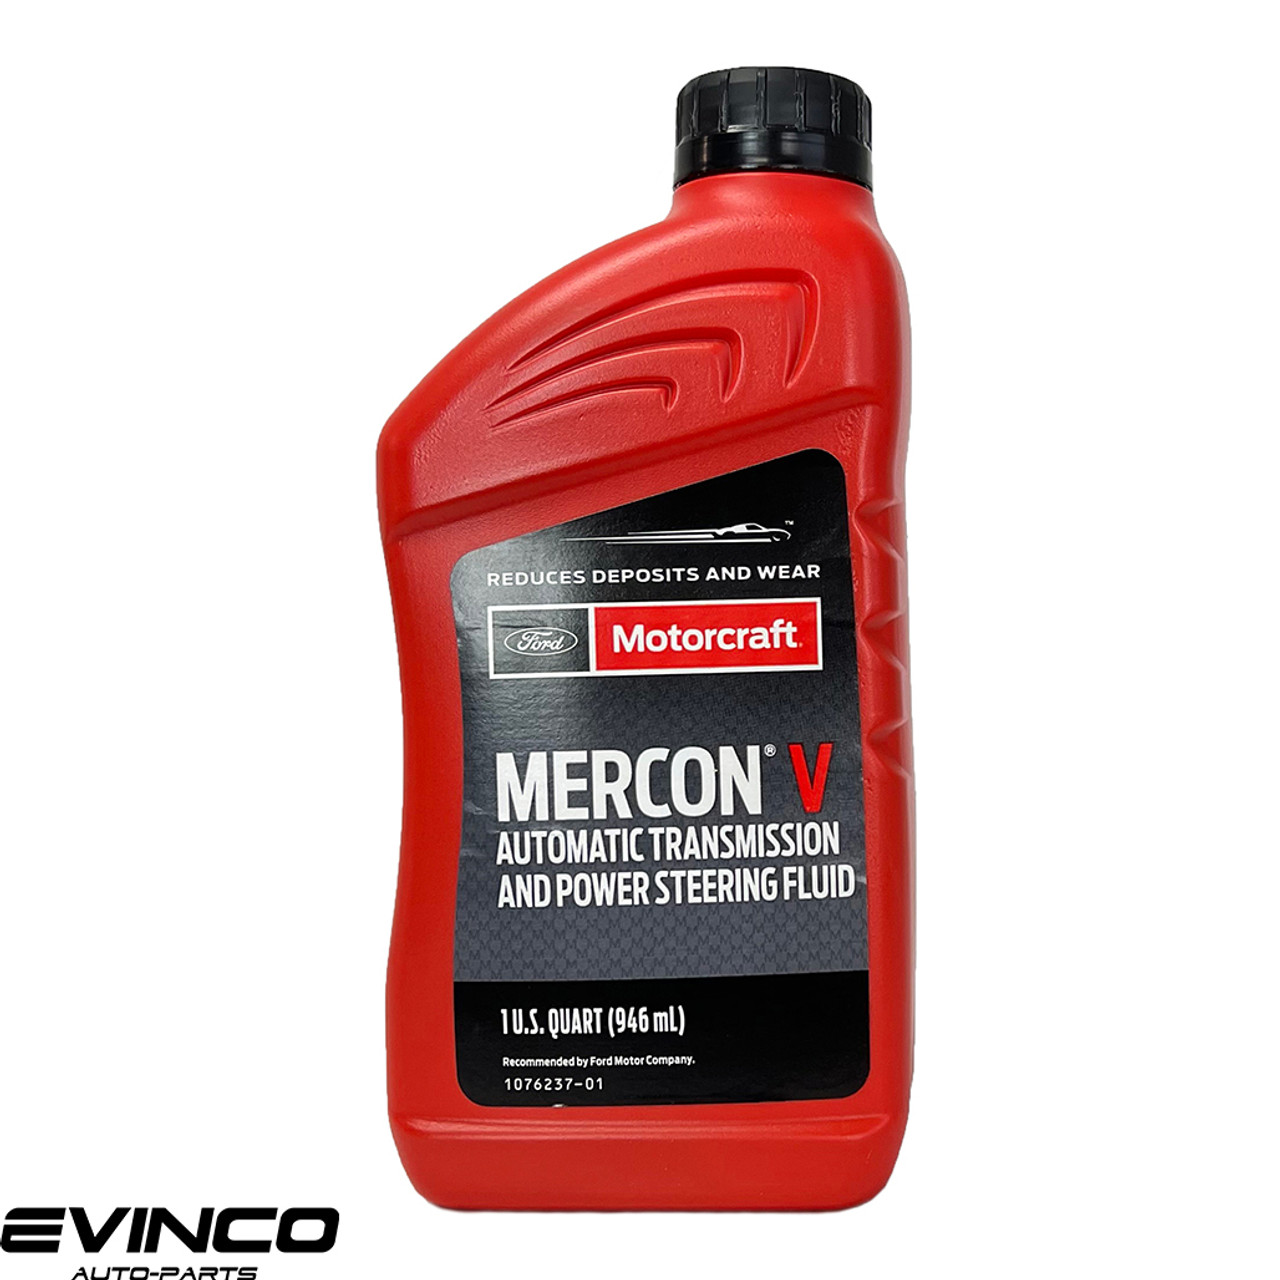 Motorcraft MERCON-V Auto Transmission and Power Steering Fluid, 16 oz.., 771850